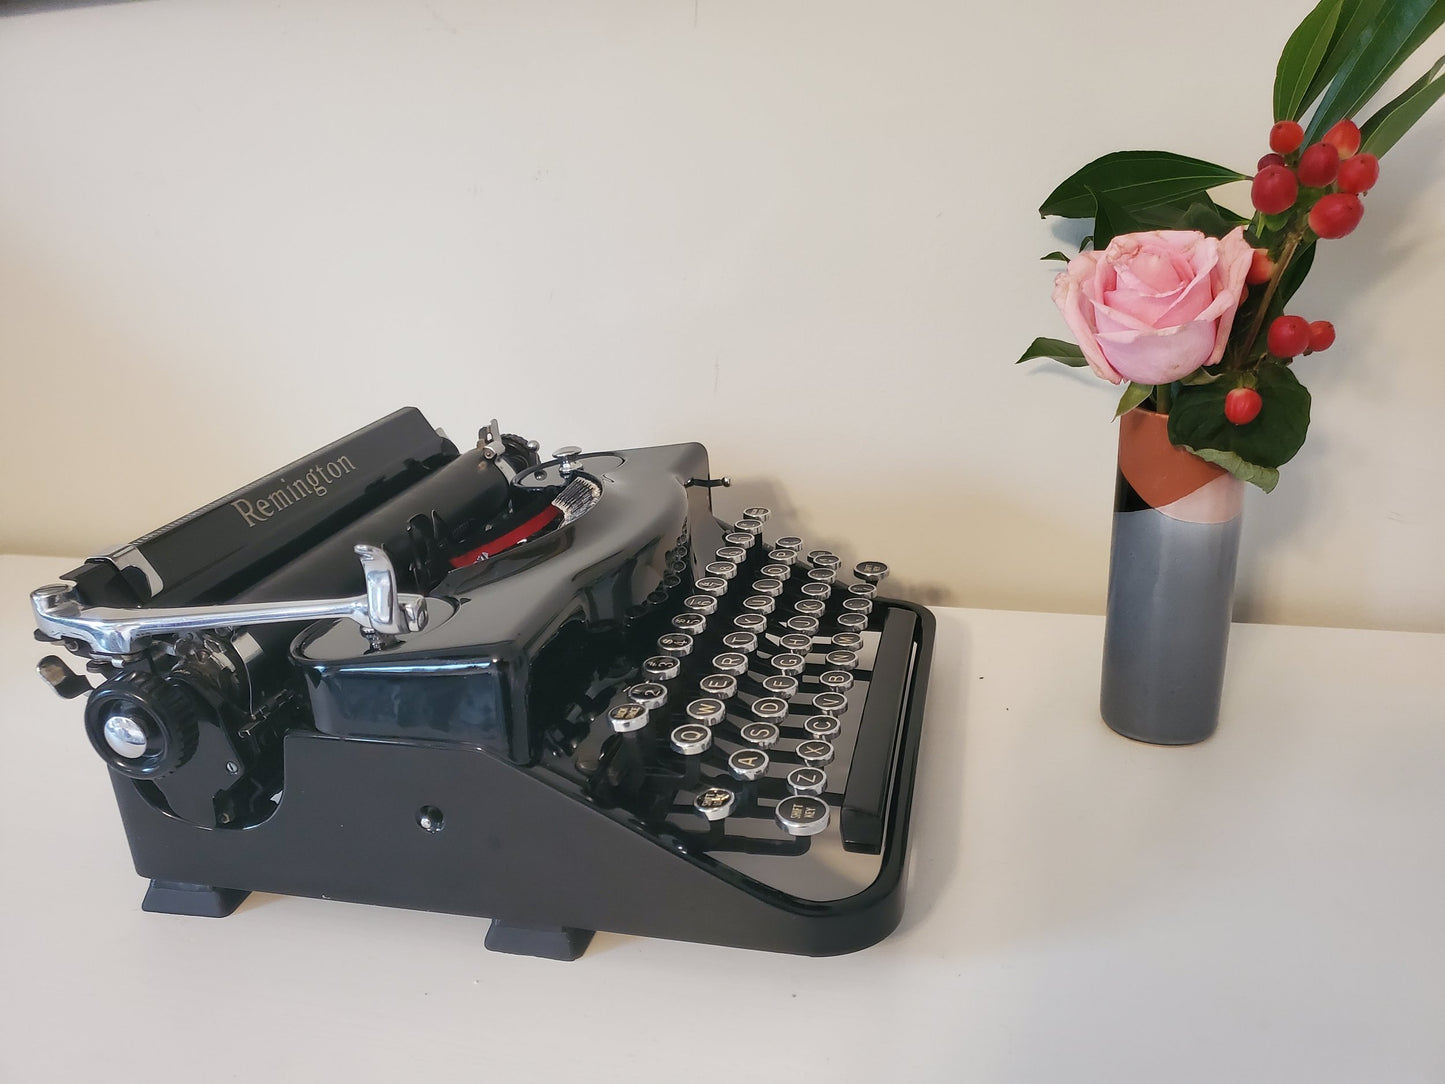 Circa 1938 Remington Model 1 'Noiseless' aka 'Speed' Working Typewriter with Case